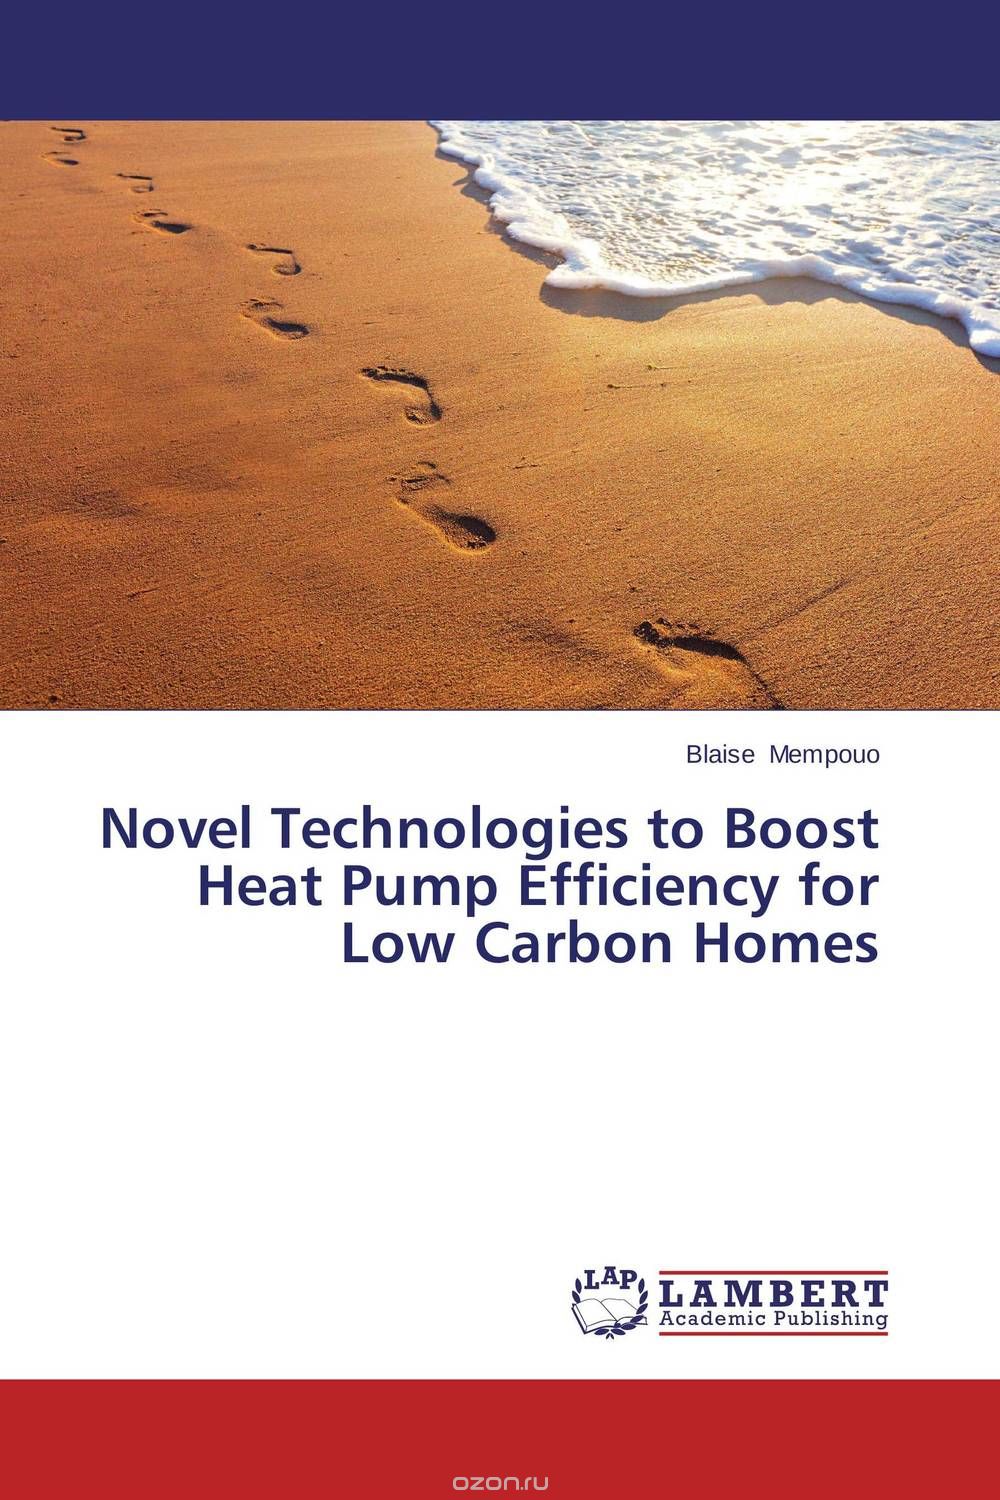 Скачать книгу "Novel Technologies to Boost Heat Pump Efficiency for Low Carbon Homes"